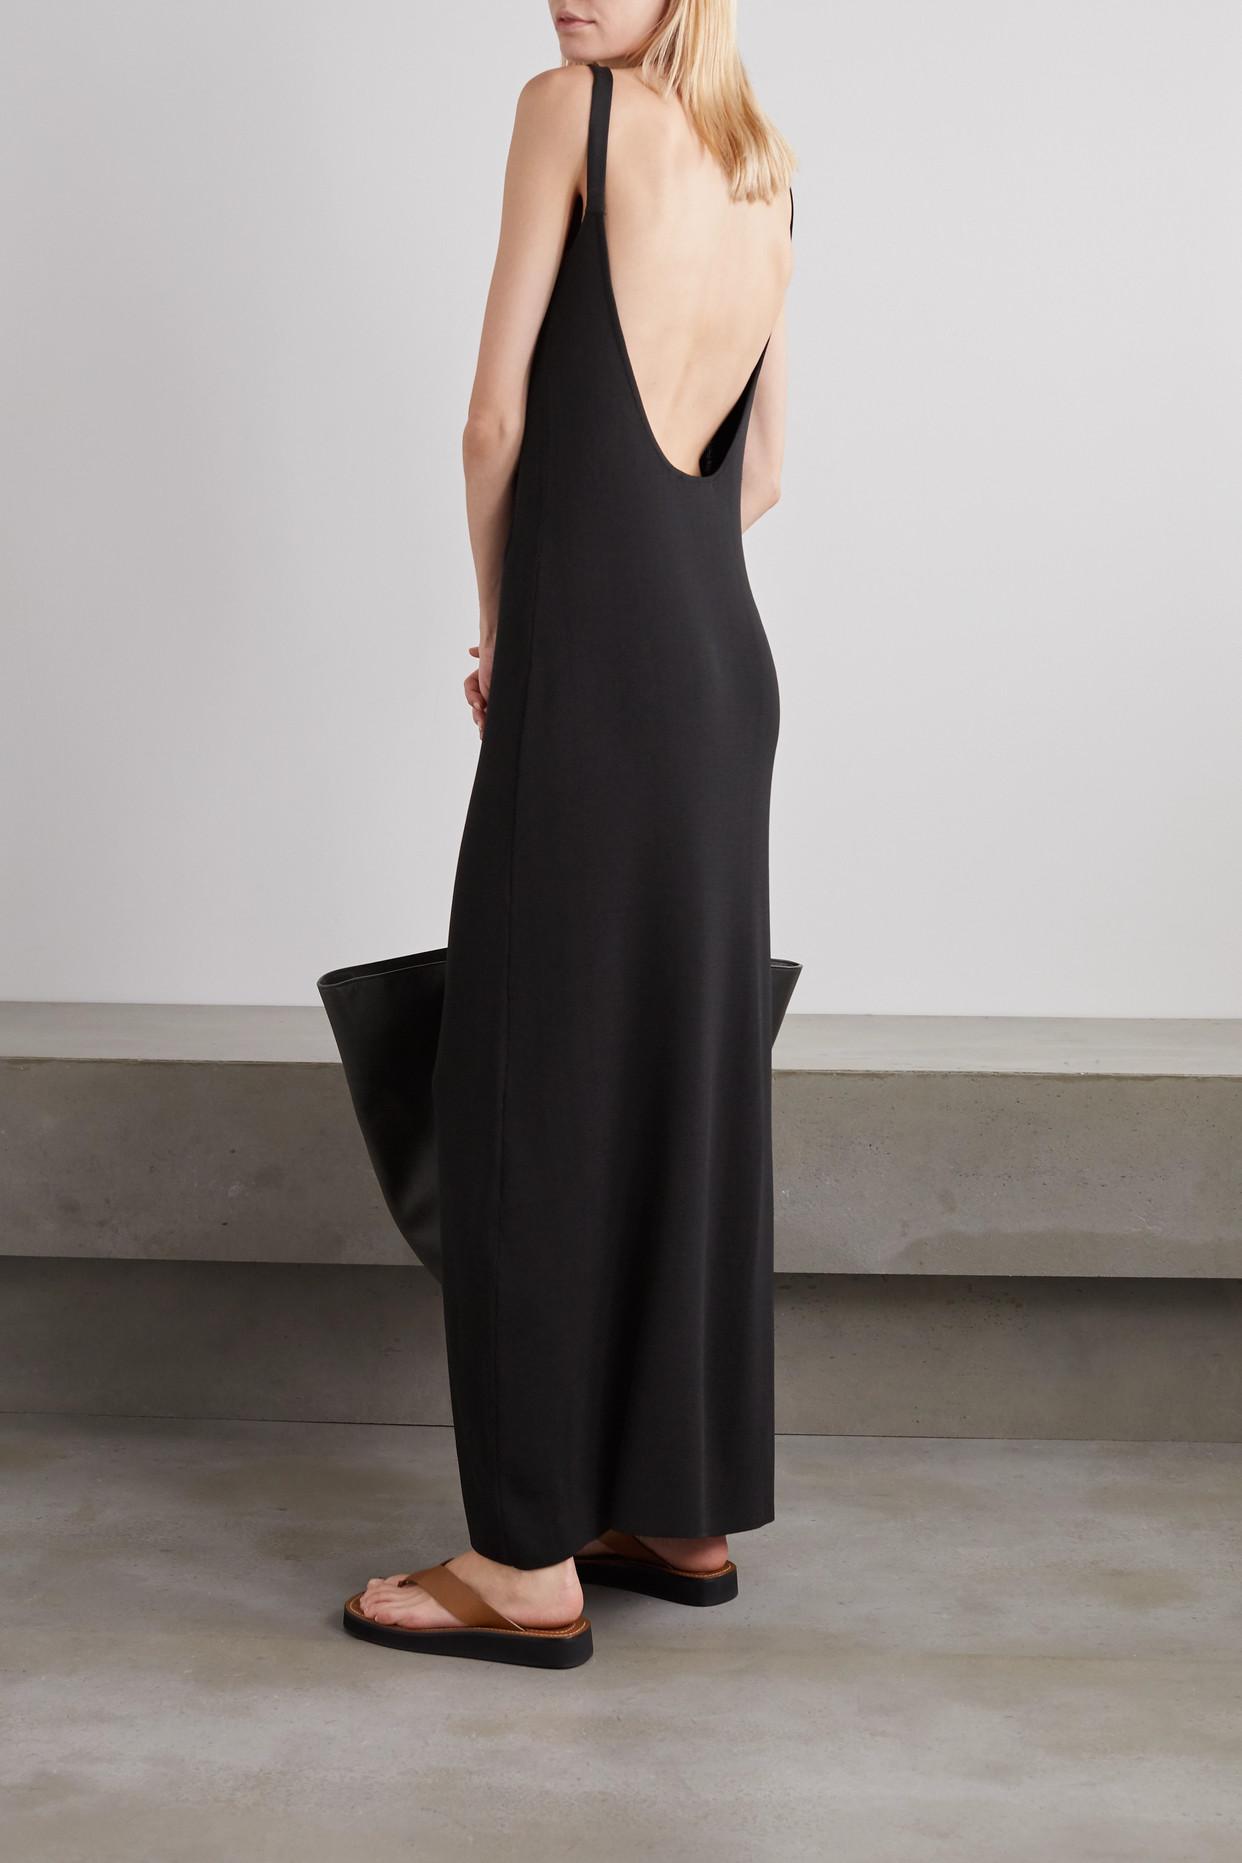 Matteau Open-back Stretch-knit Maxi Dress in Black | Lyst